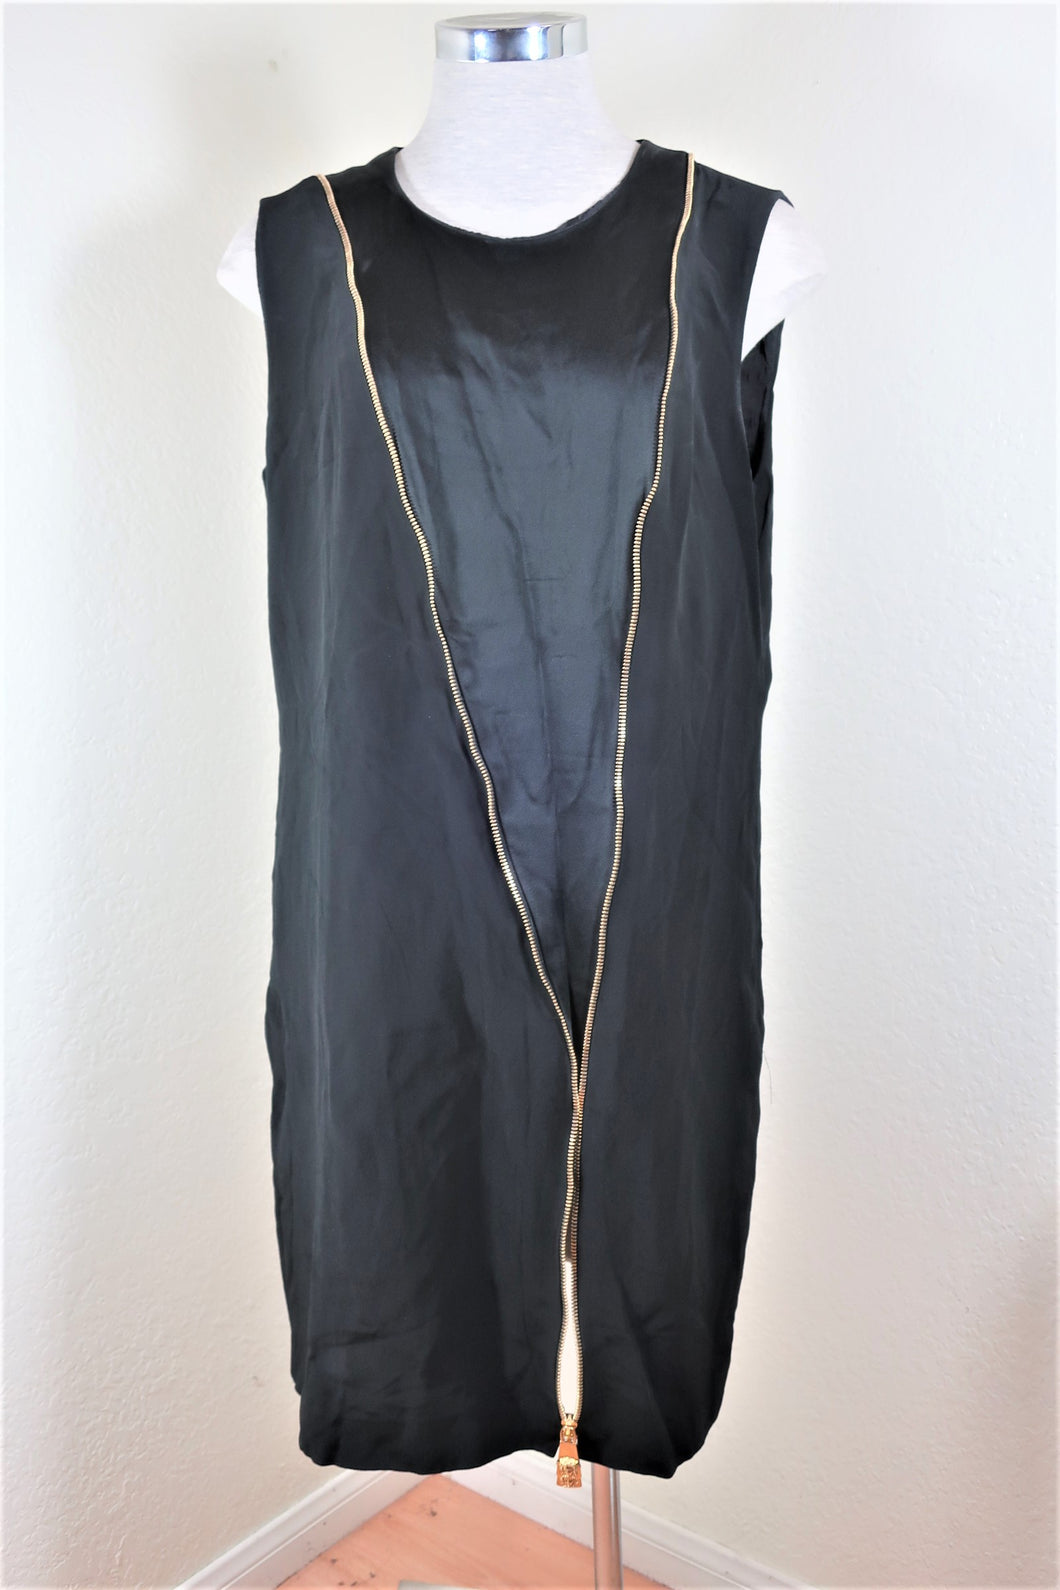 Gianni VERSACE Black Zip Dress Medium 46 6 7 8